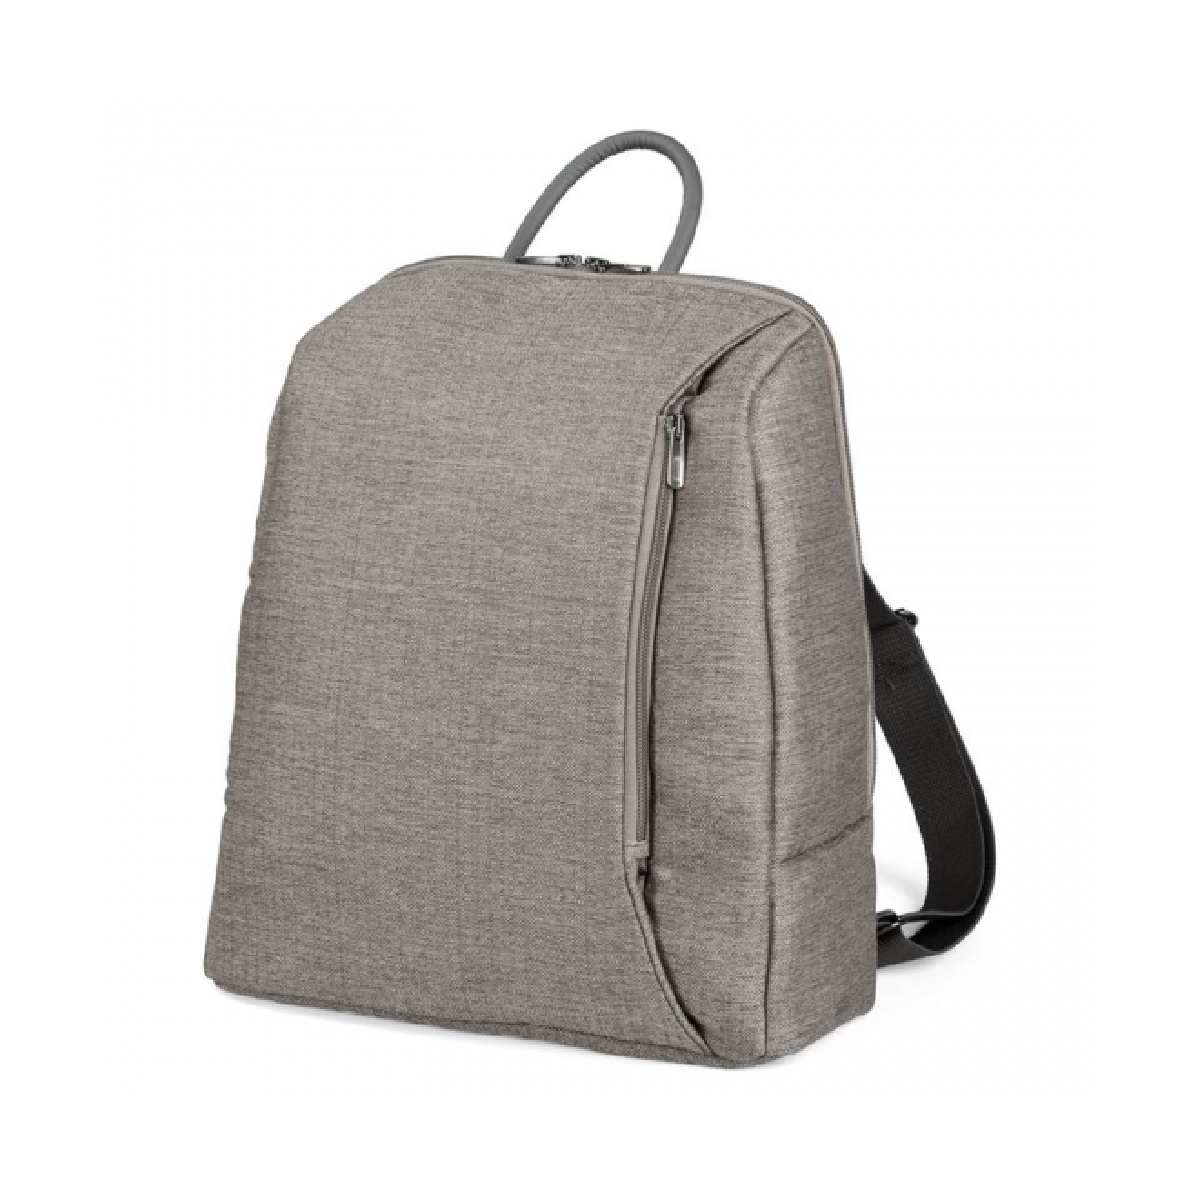 https://www.kiddies-kingdom.com/211715-thickbox_default/peg-perego-backpack-changing-bag-city-grey-2021.jpg